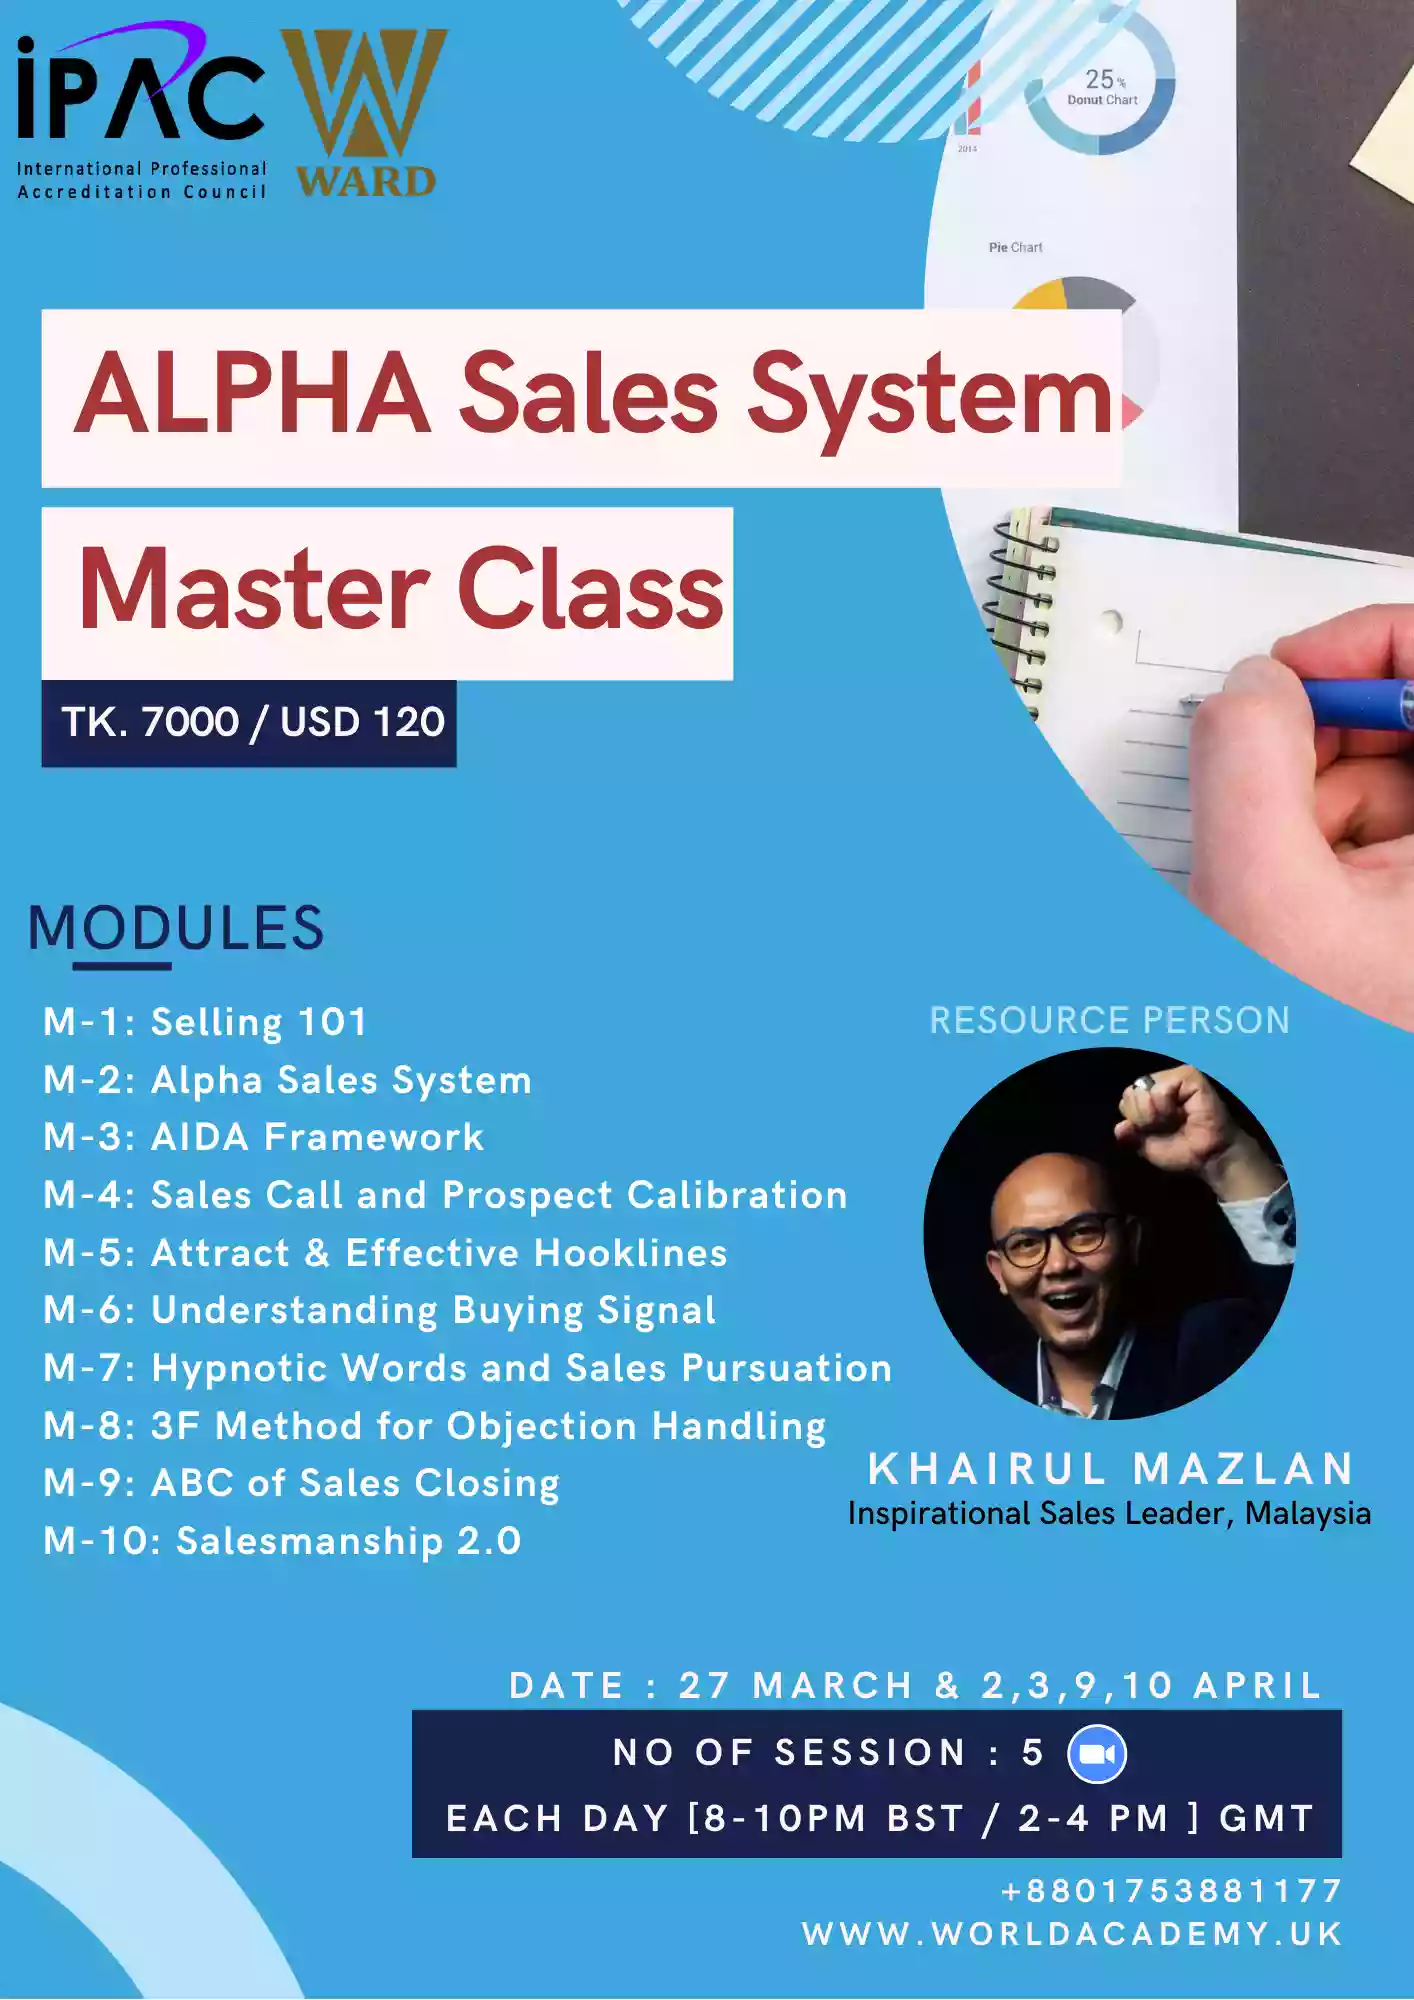 ALPHA Sales System Master Class